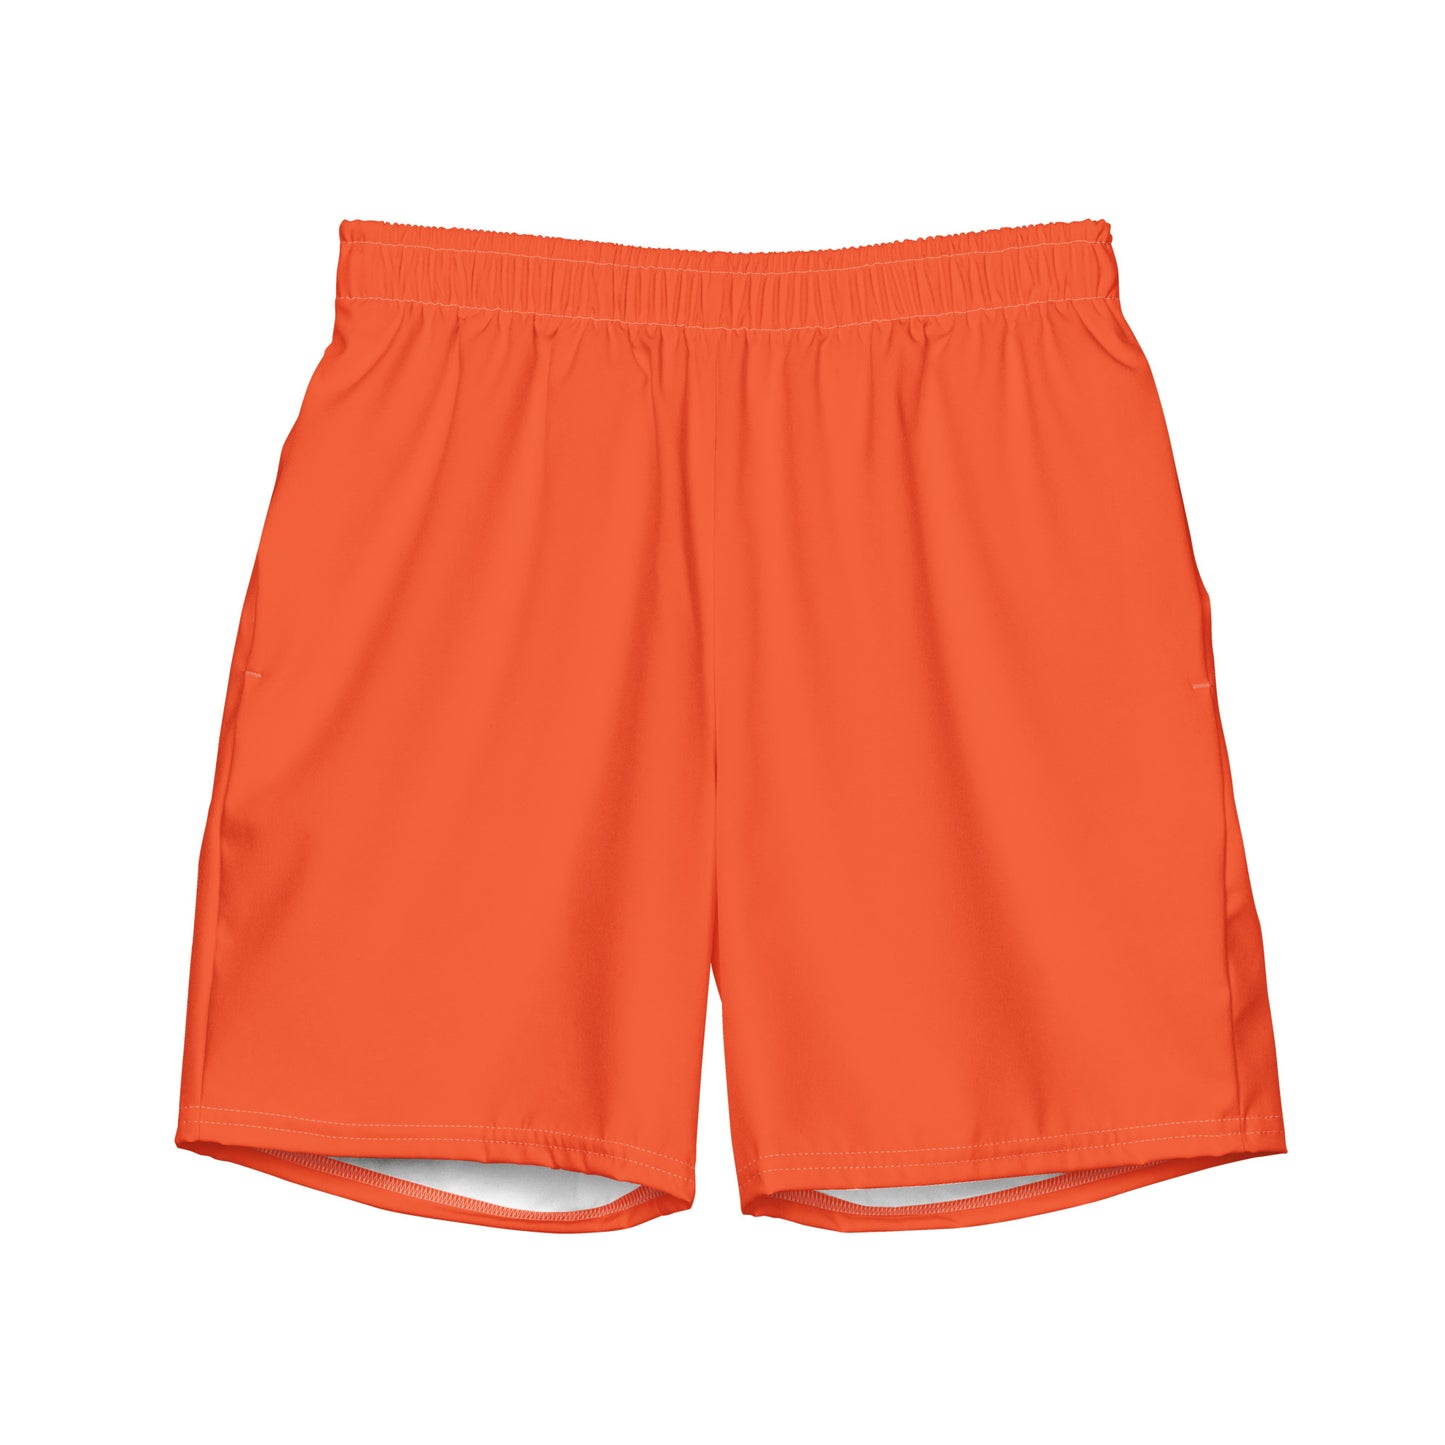 Bright Orange - Sustainably Made Men's swim trunks